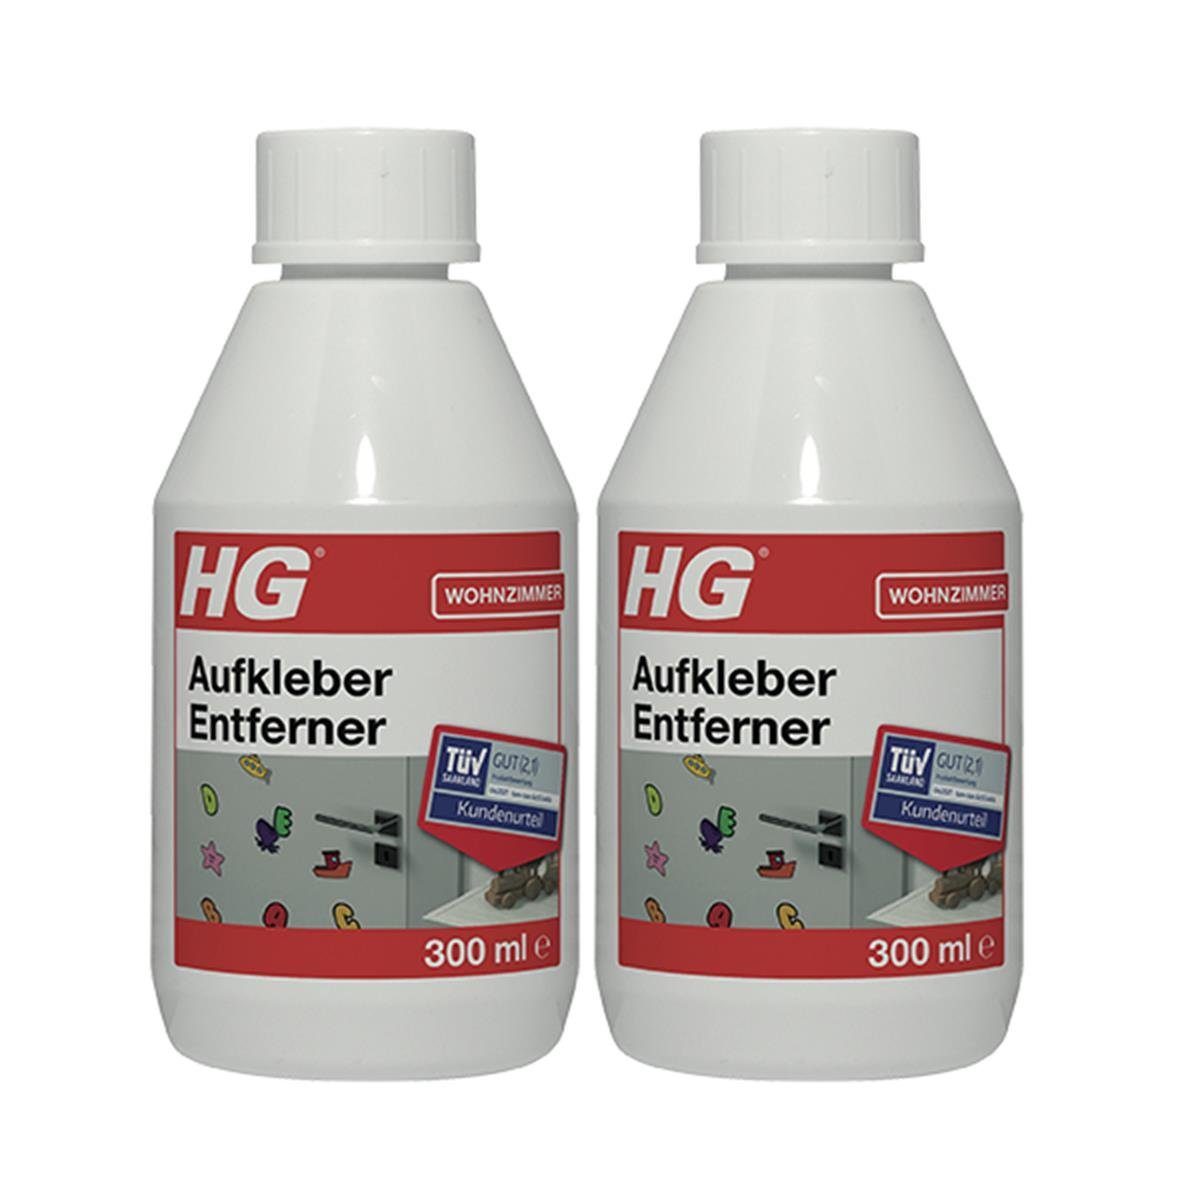 HG HG Aufkleber Entferner 300ml (2er Pack) Spezialwaschmittel